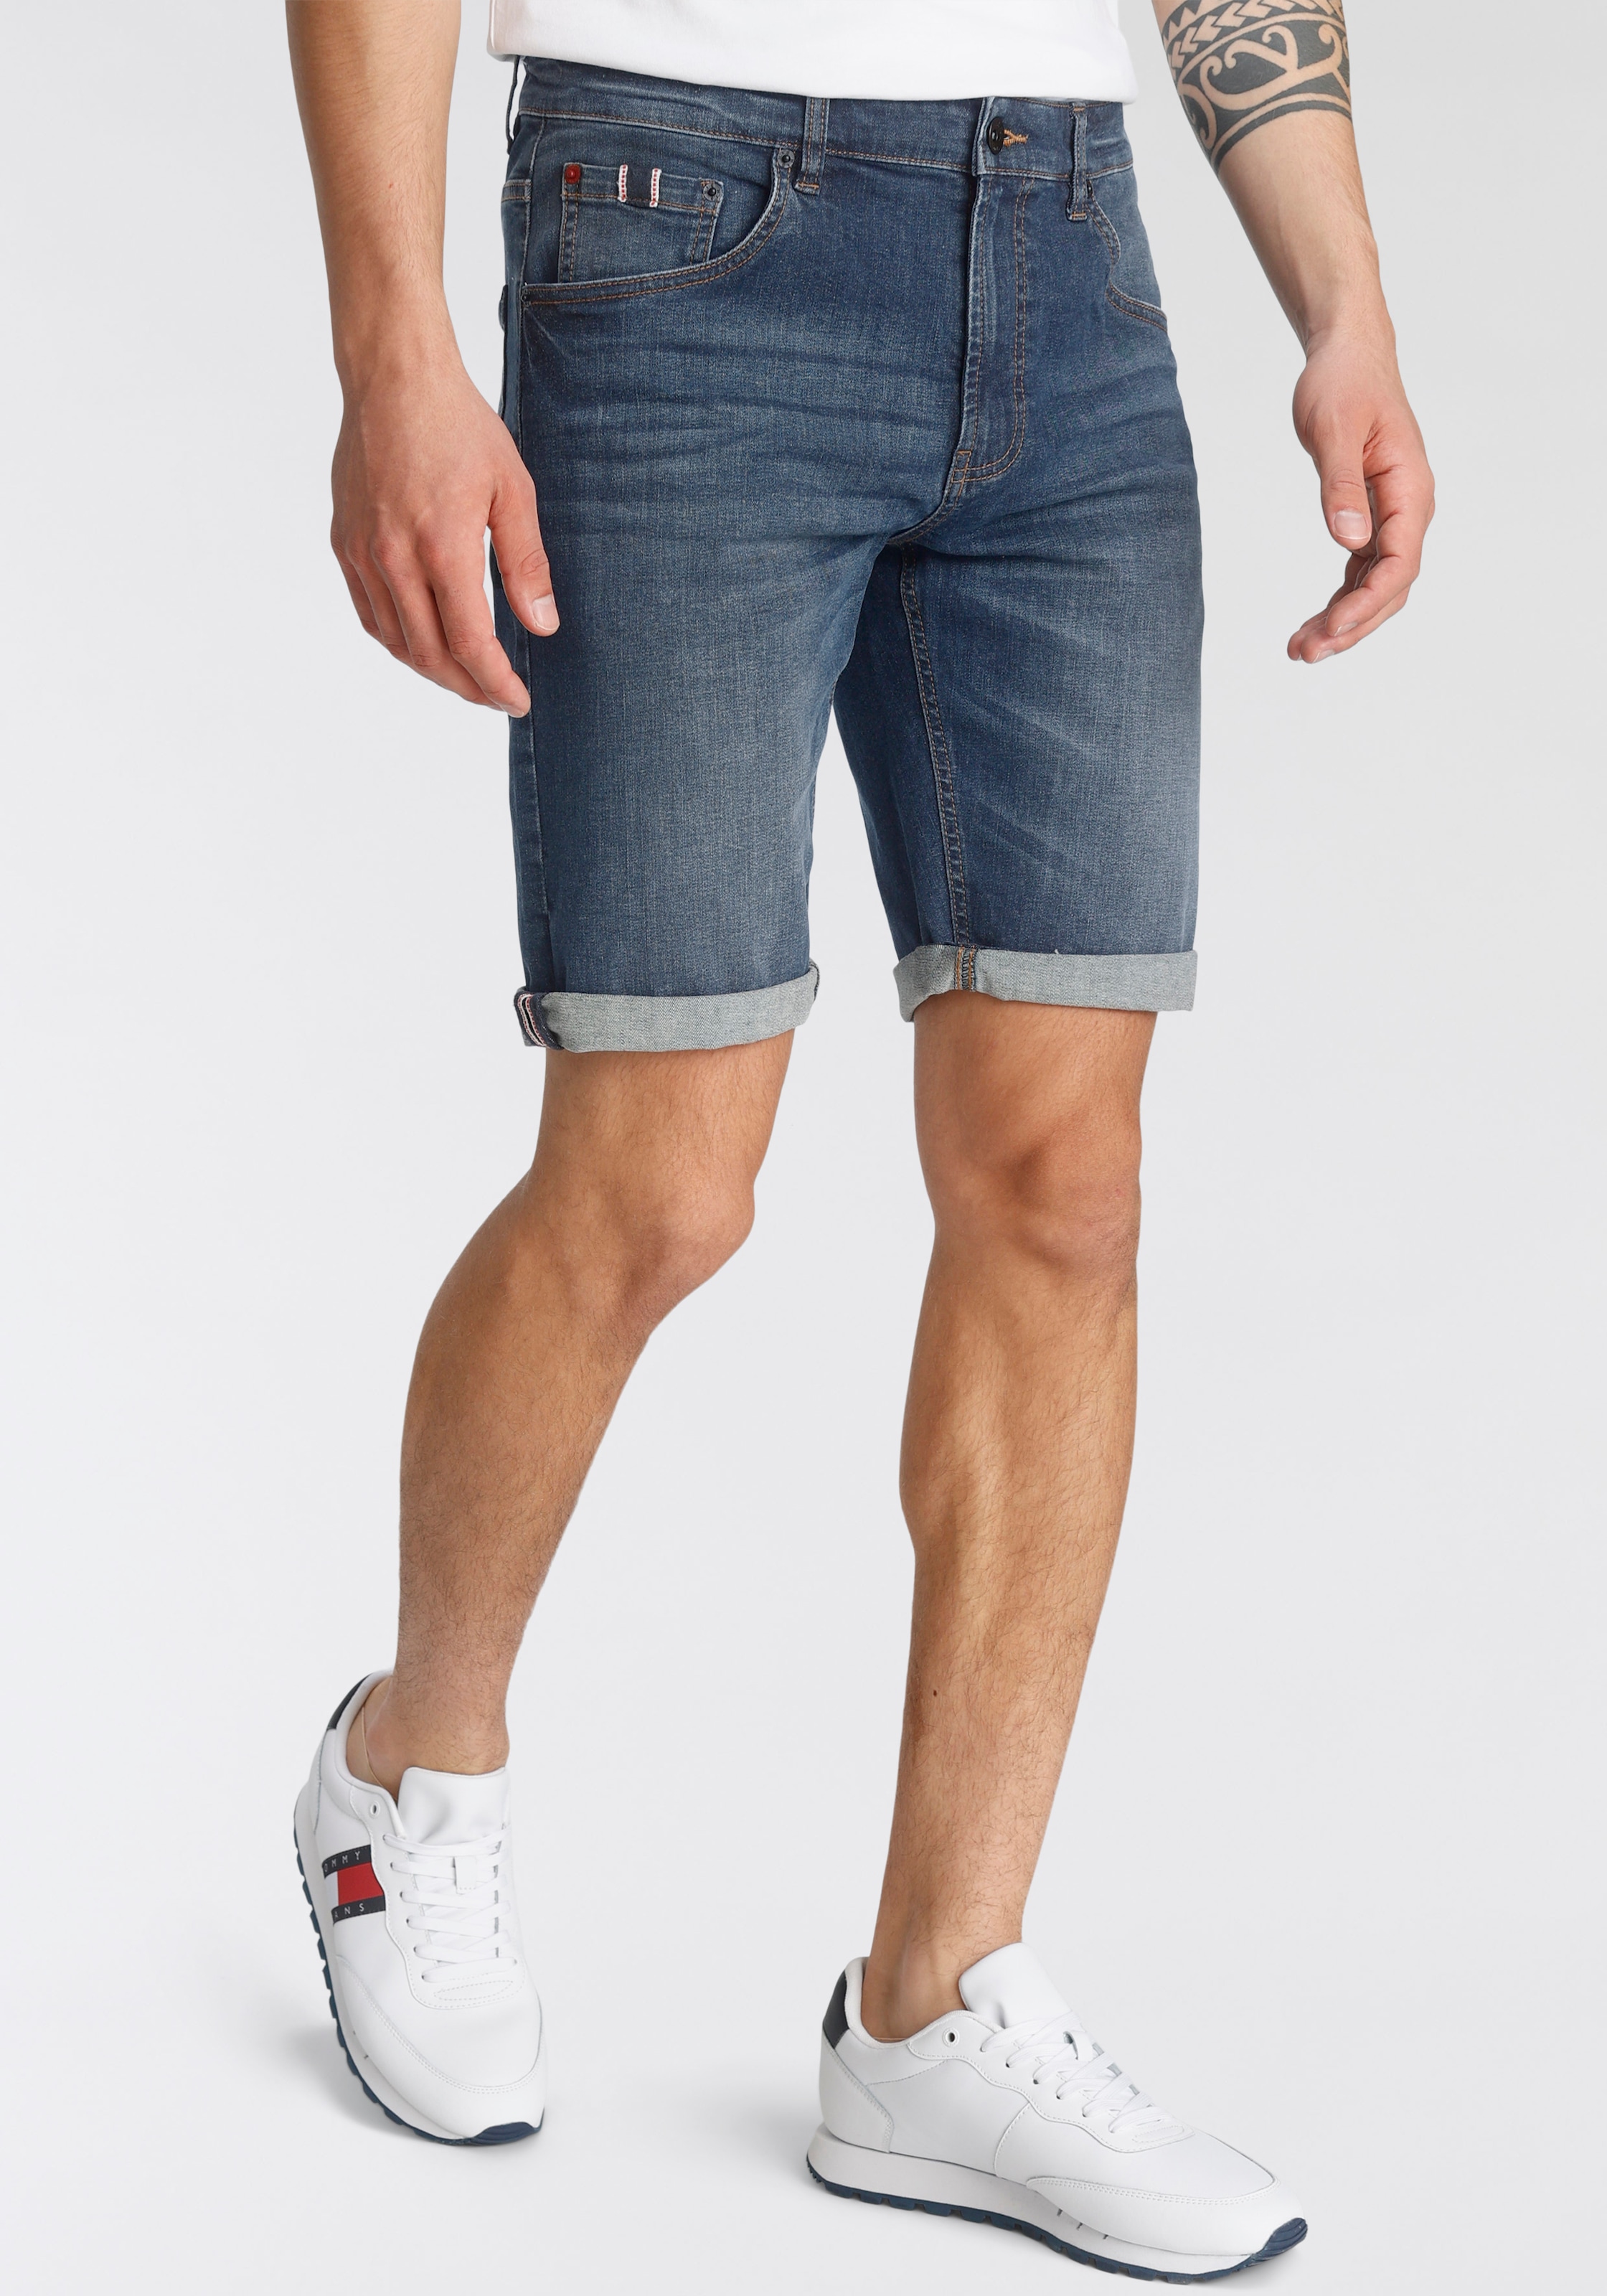 Jeans Shorts - aktuelle Modetrends online shoppen jetzt